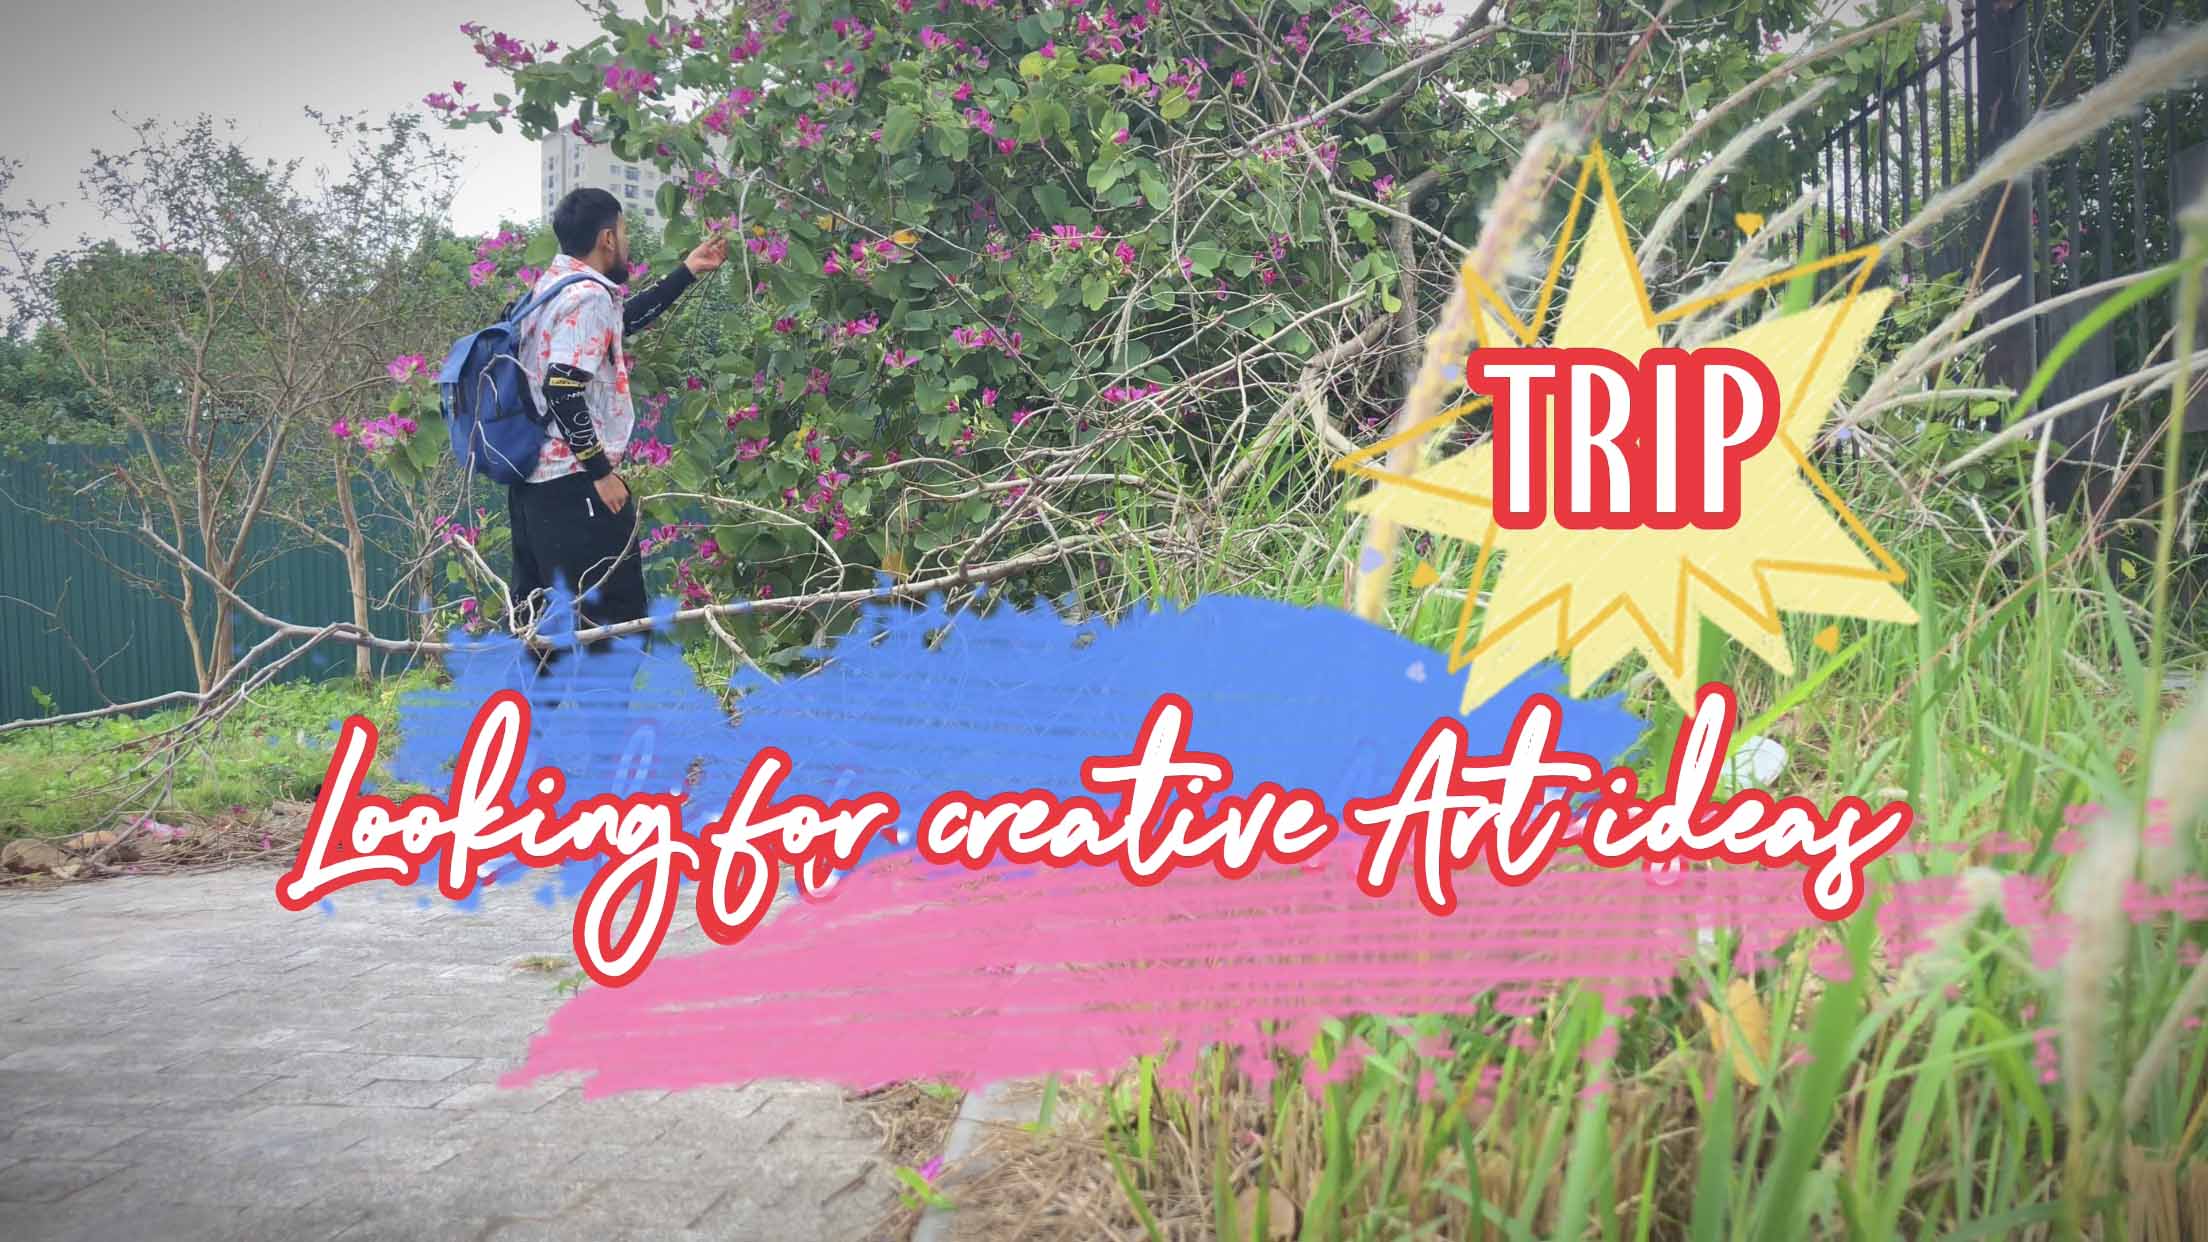 Trip looking for creative Art ideas 1